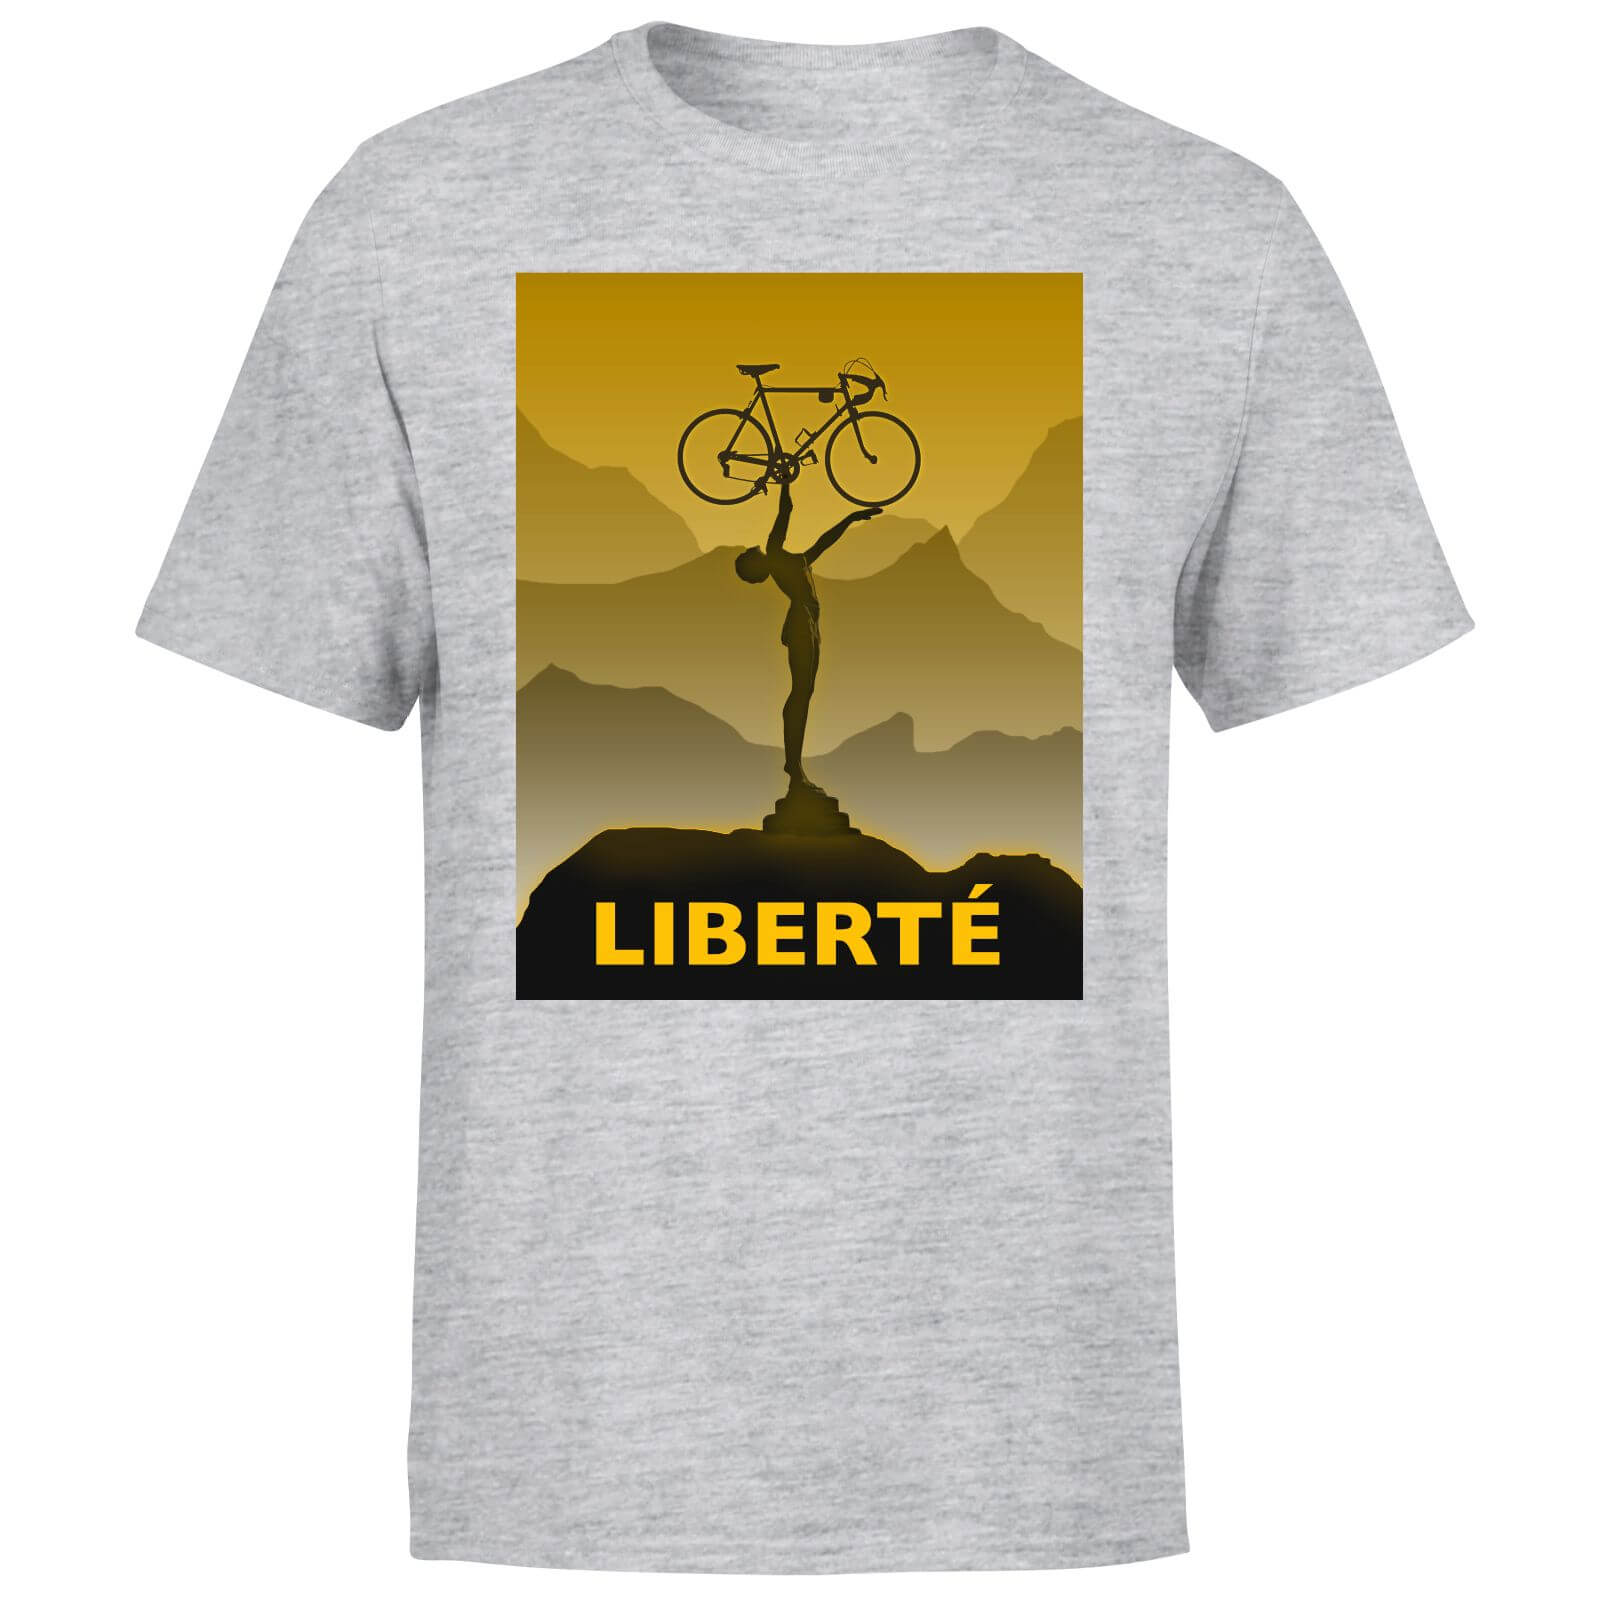 Liberte Men's T-Shirt - Grey - 5XL - Grey